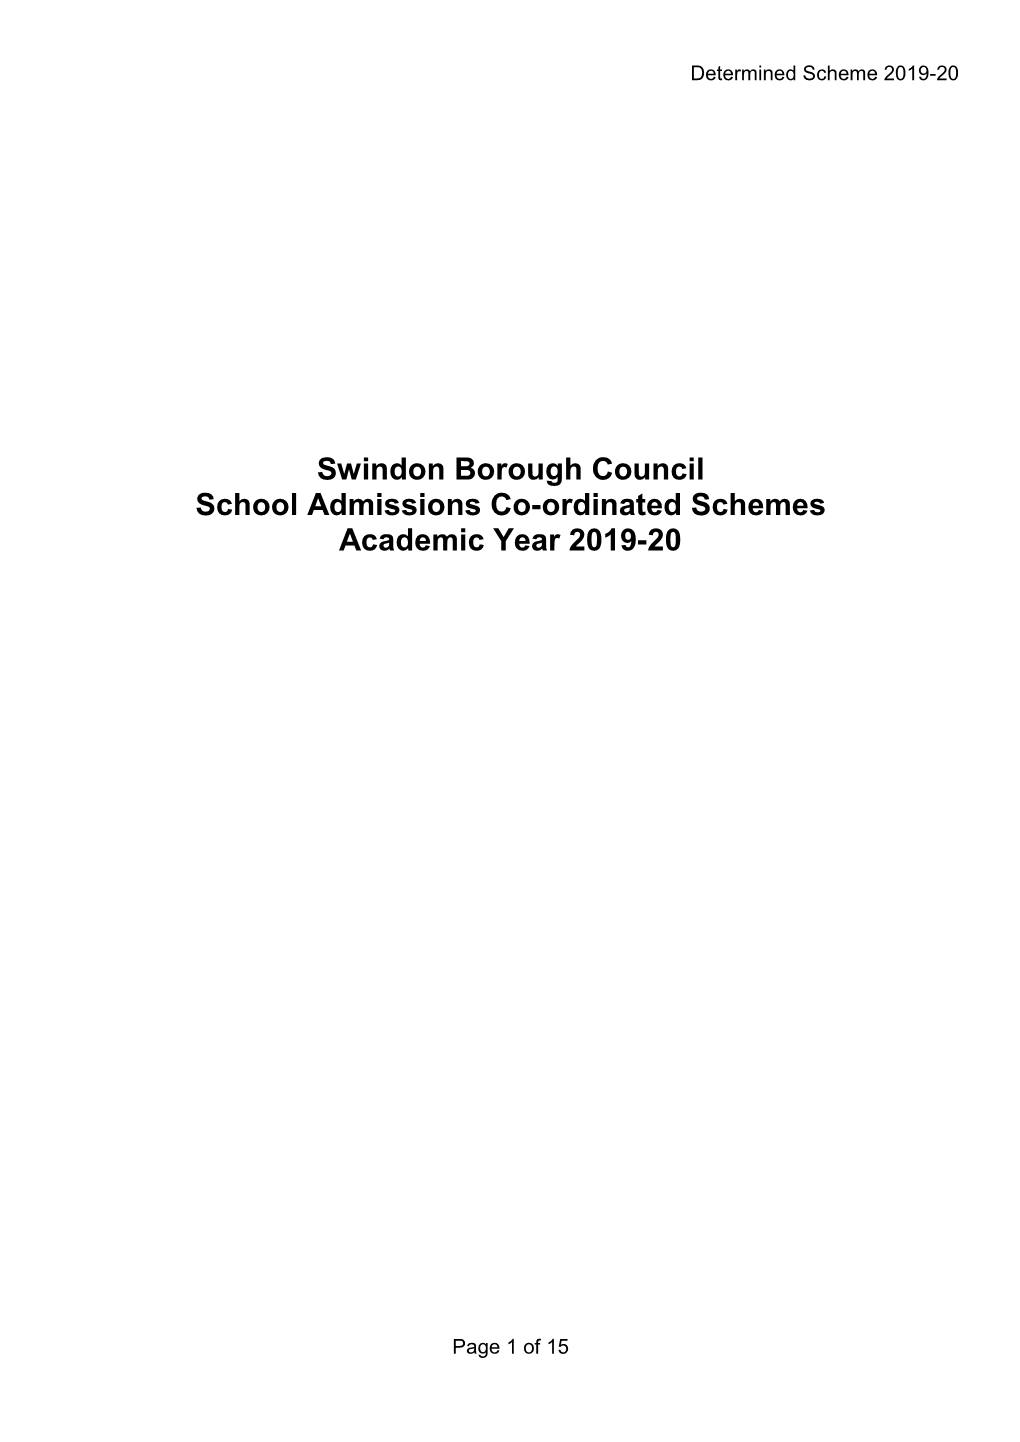 School Admissions Co-Ordinated Scheme 2019-20